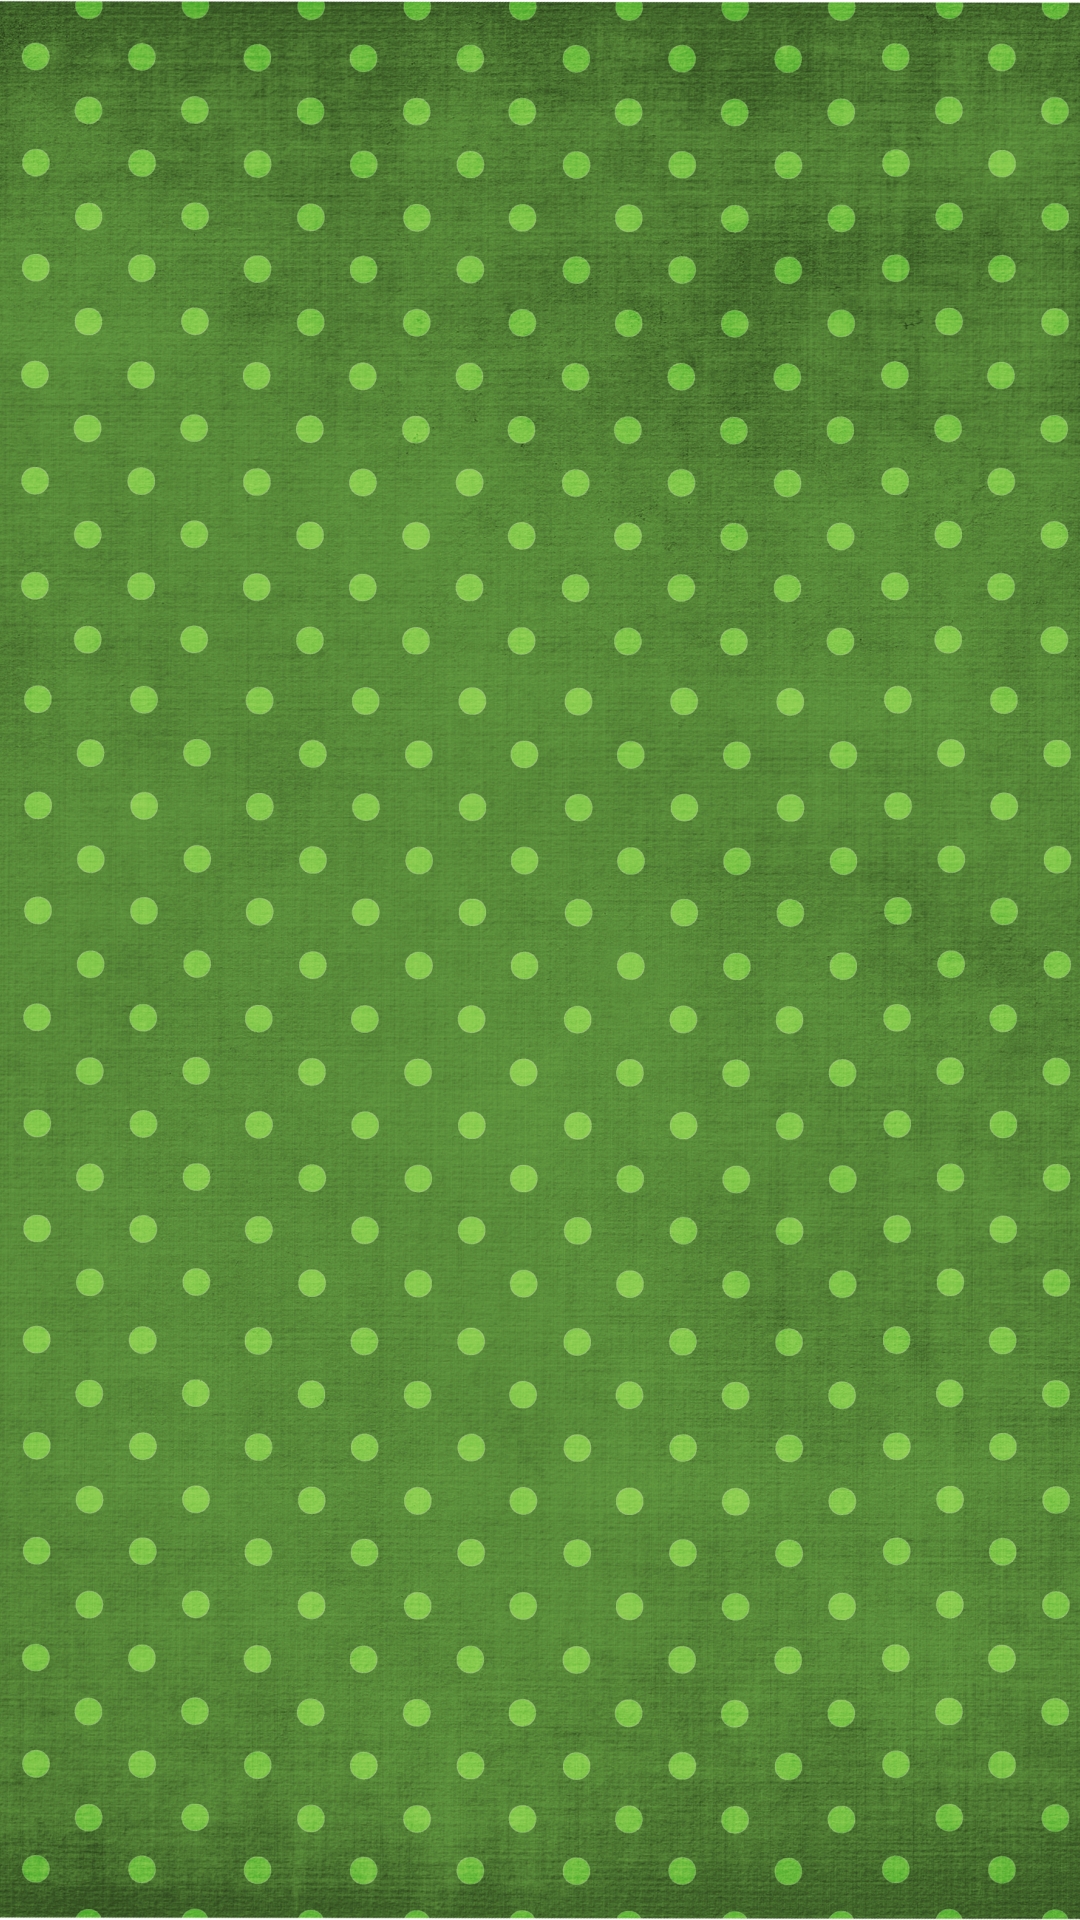 iPhone 6 Plus Wallpaper Green Pattern 02 | iPhone 6 Wallpapers